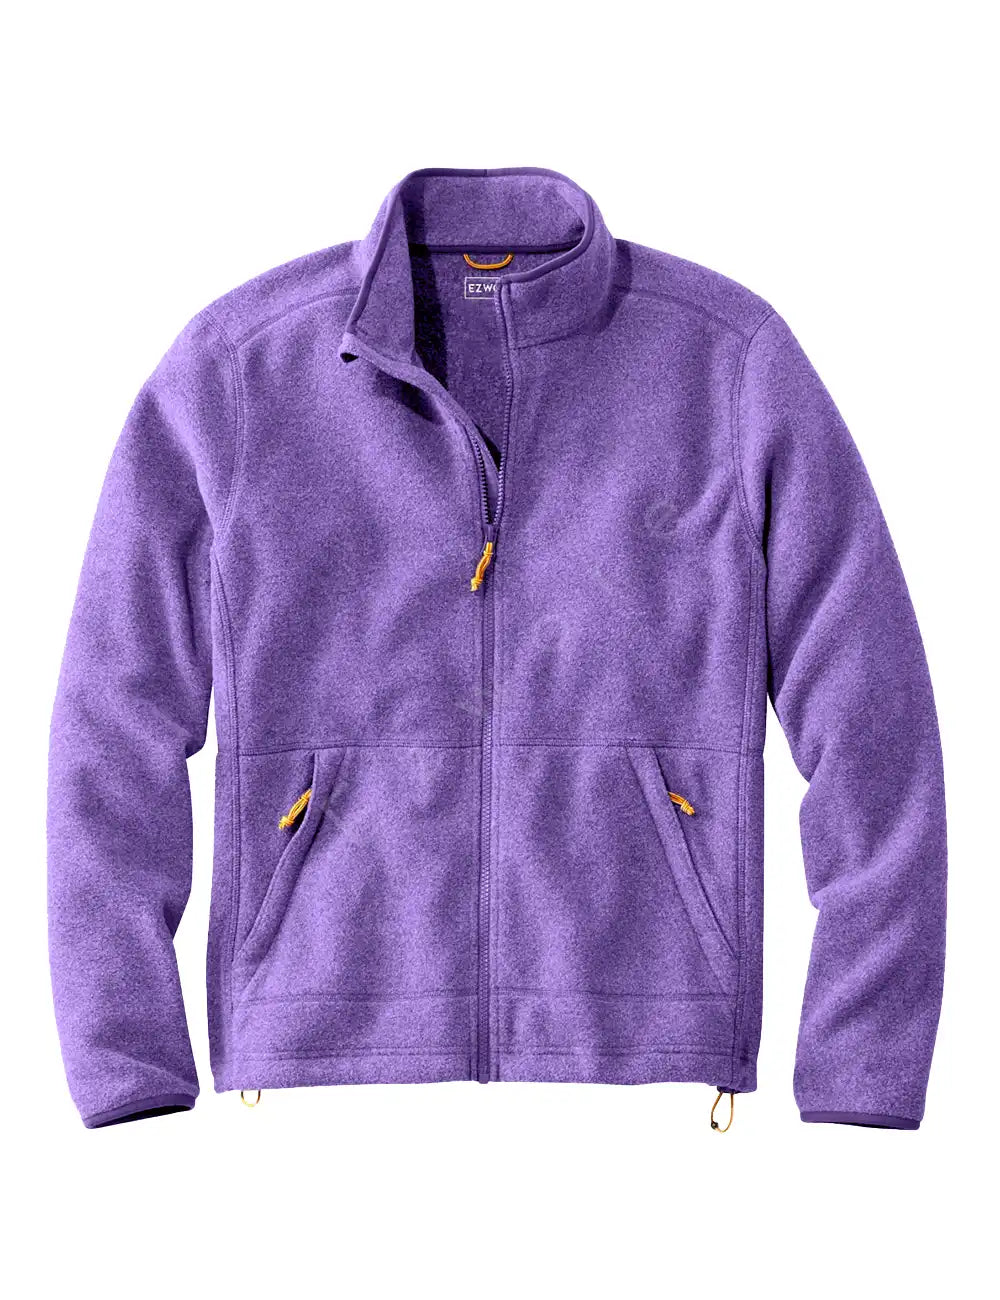 Men's Mountain Classic Purple Fleece Jacket